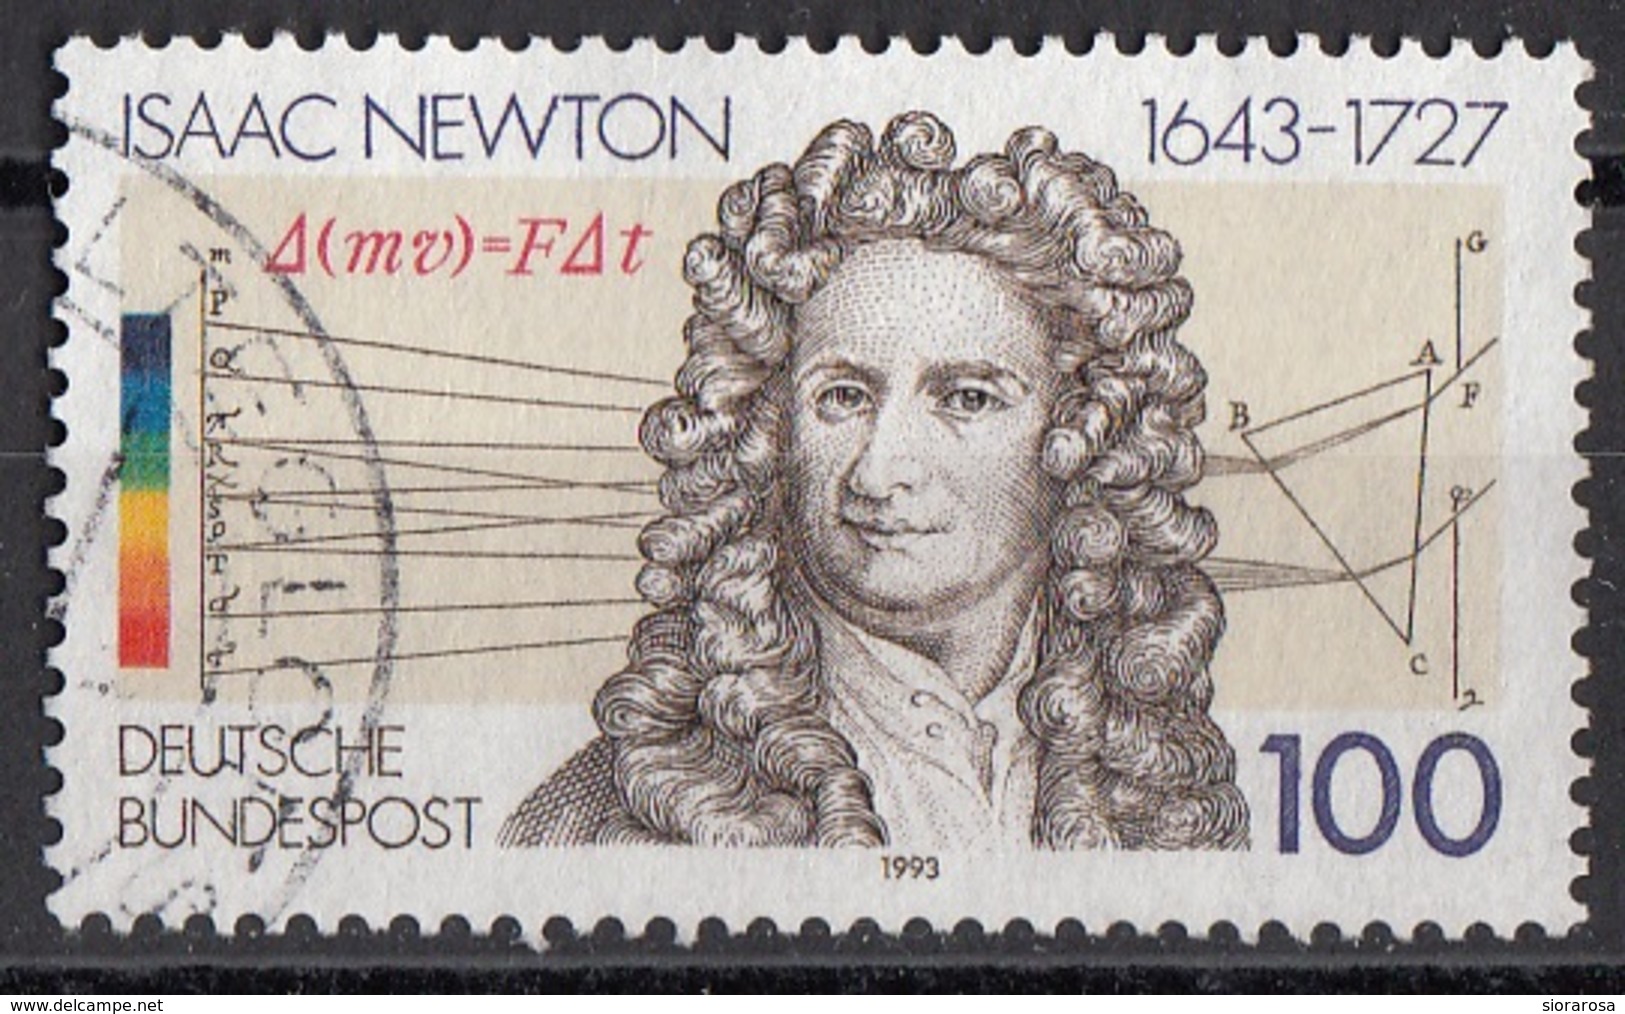 1771 Germania 1993 Isaac Newton Matematico Astronomo Fisico Teologo Germany Bundespost - Theologians